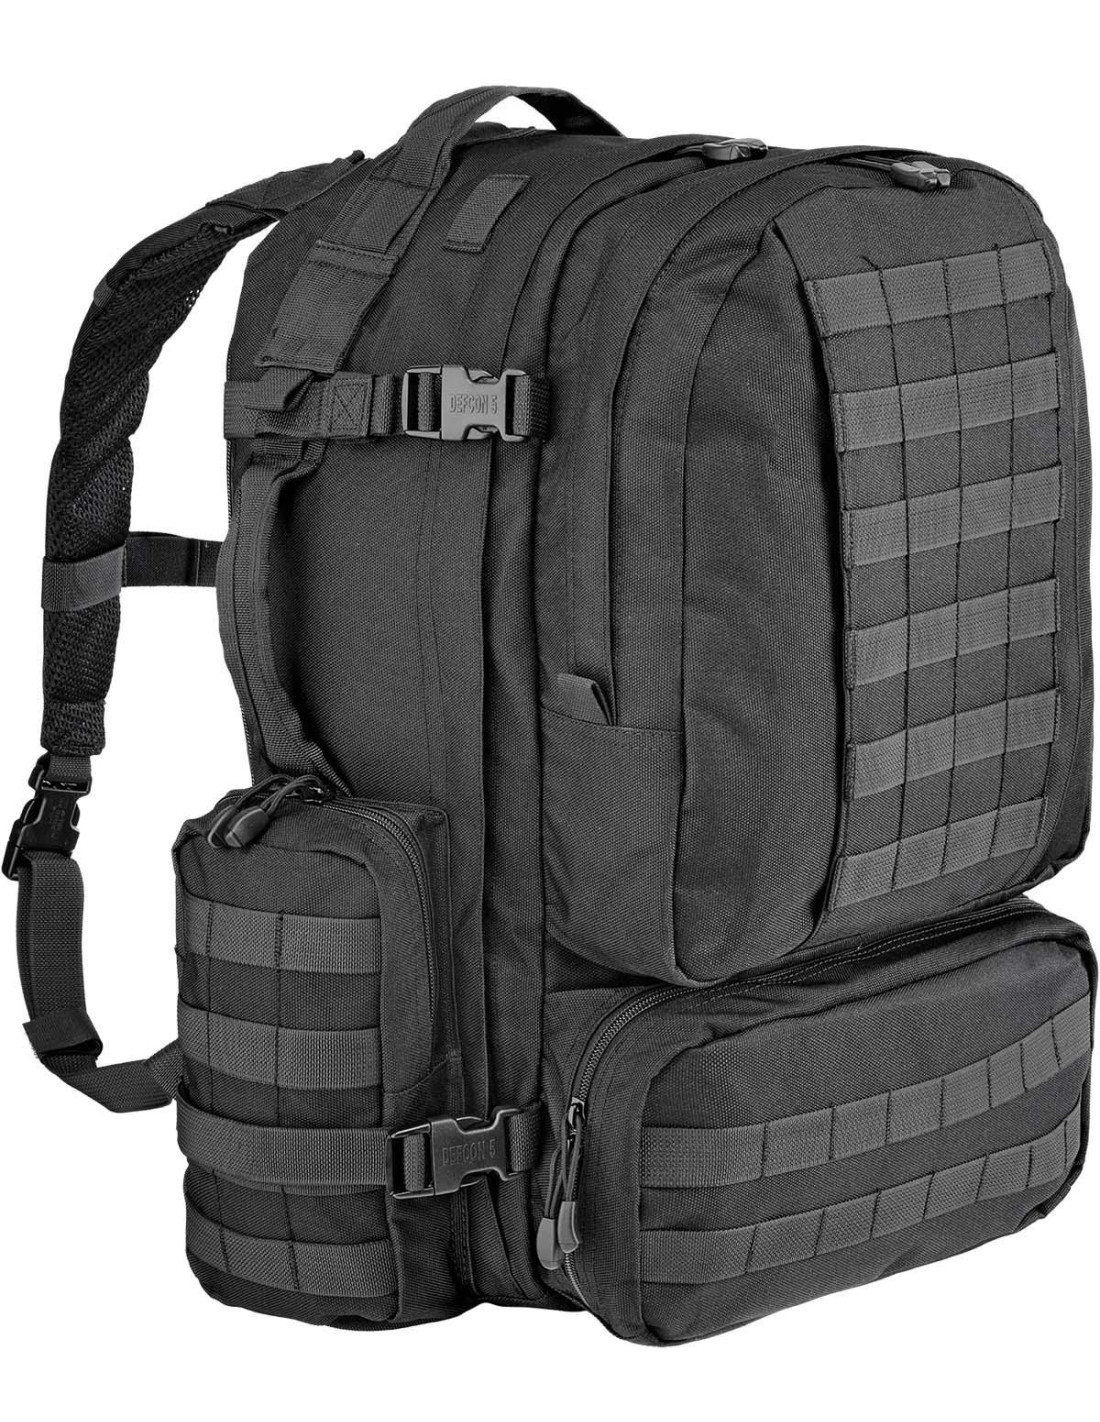 Modular Backpack 60 liters